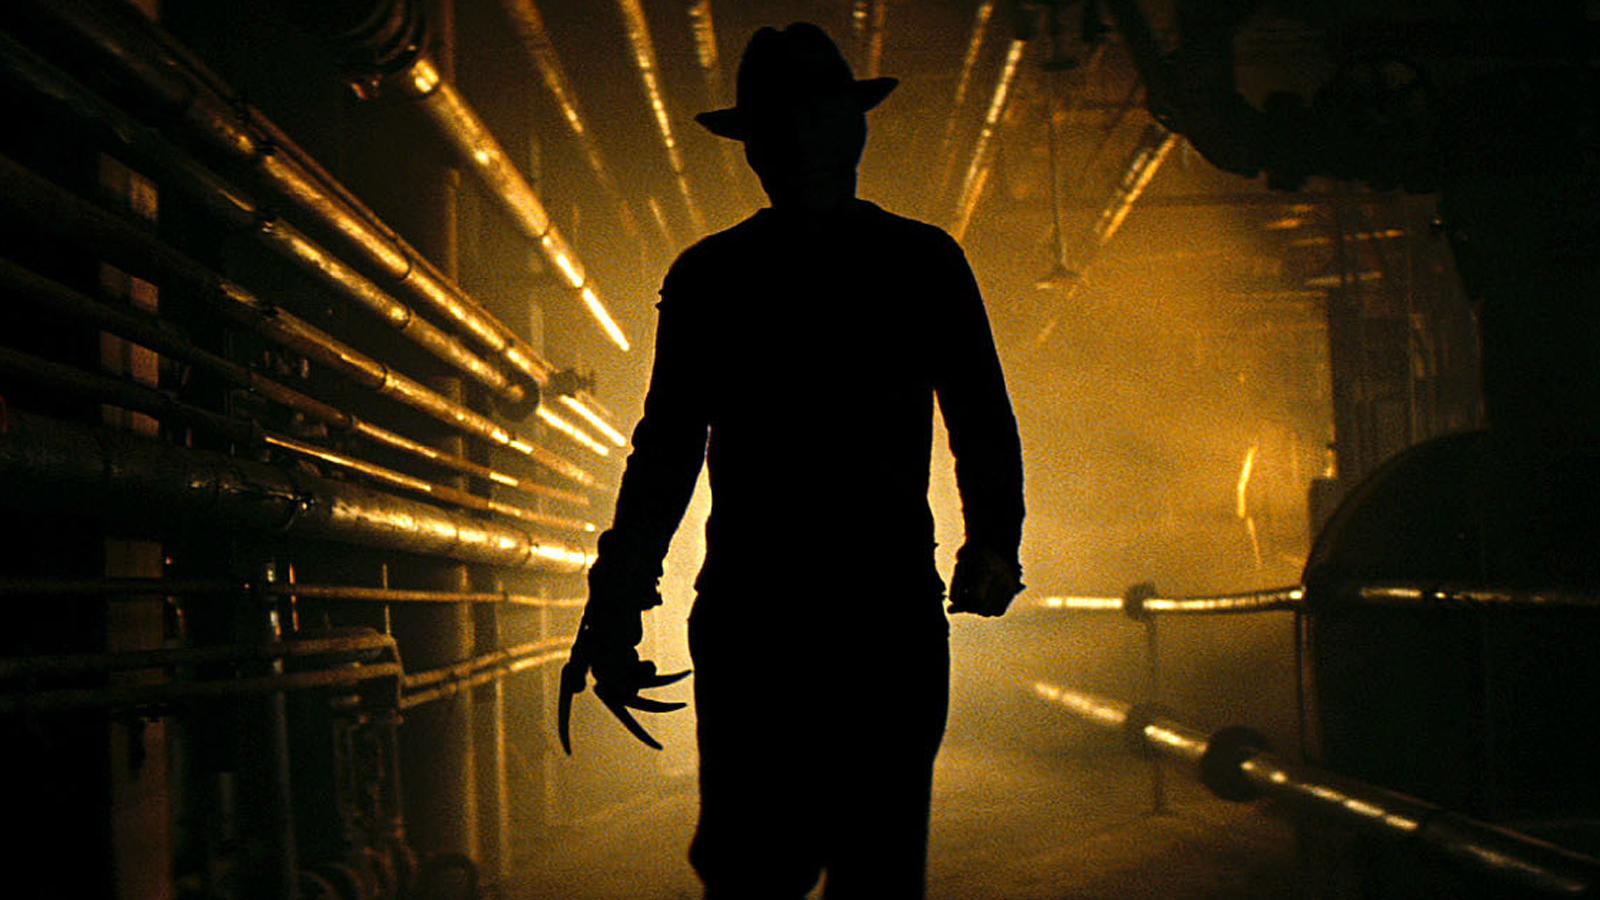 A Nightmare On Elm Street (2010) Wallpapers